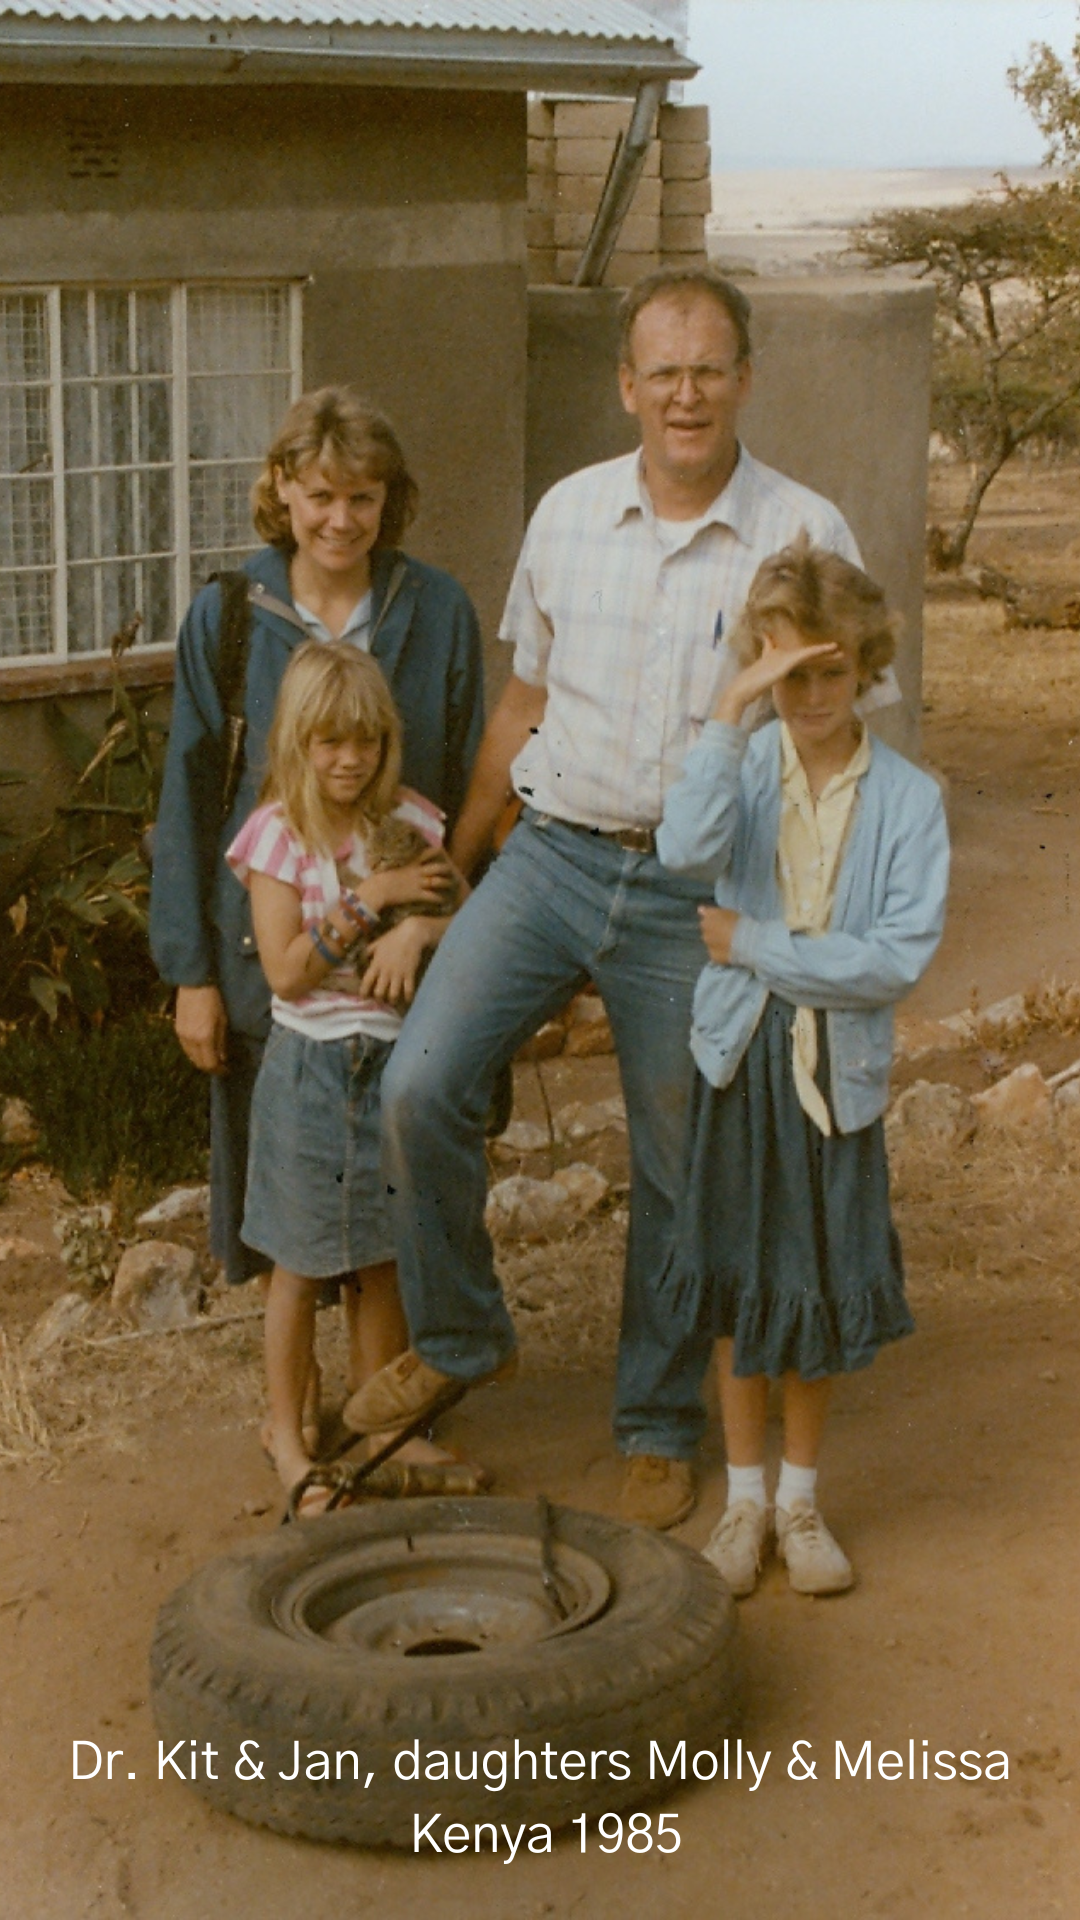 Dr. Kit & Jan, daughters Molly & Melissa, Kenya 1985